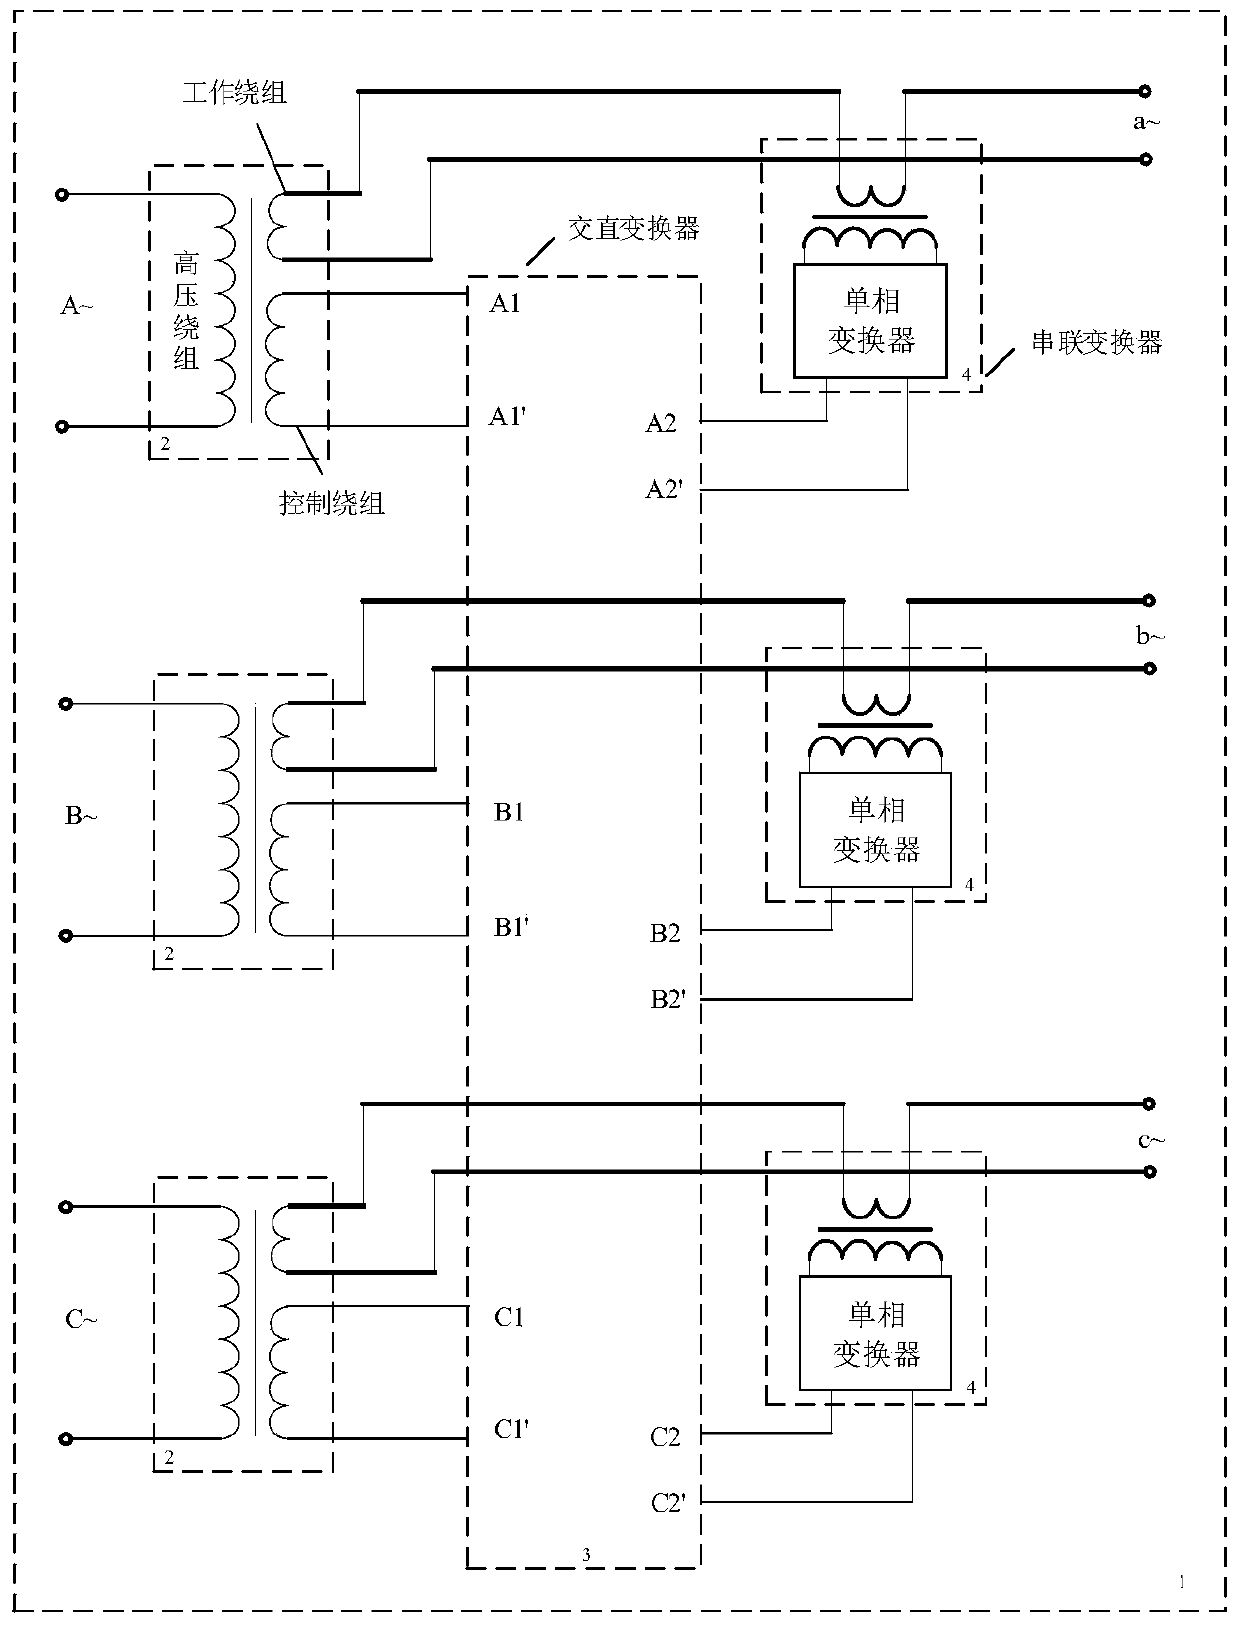 An electronic voltage regulating electric furnace transformer